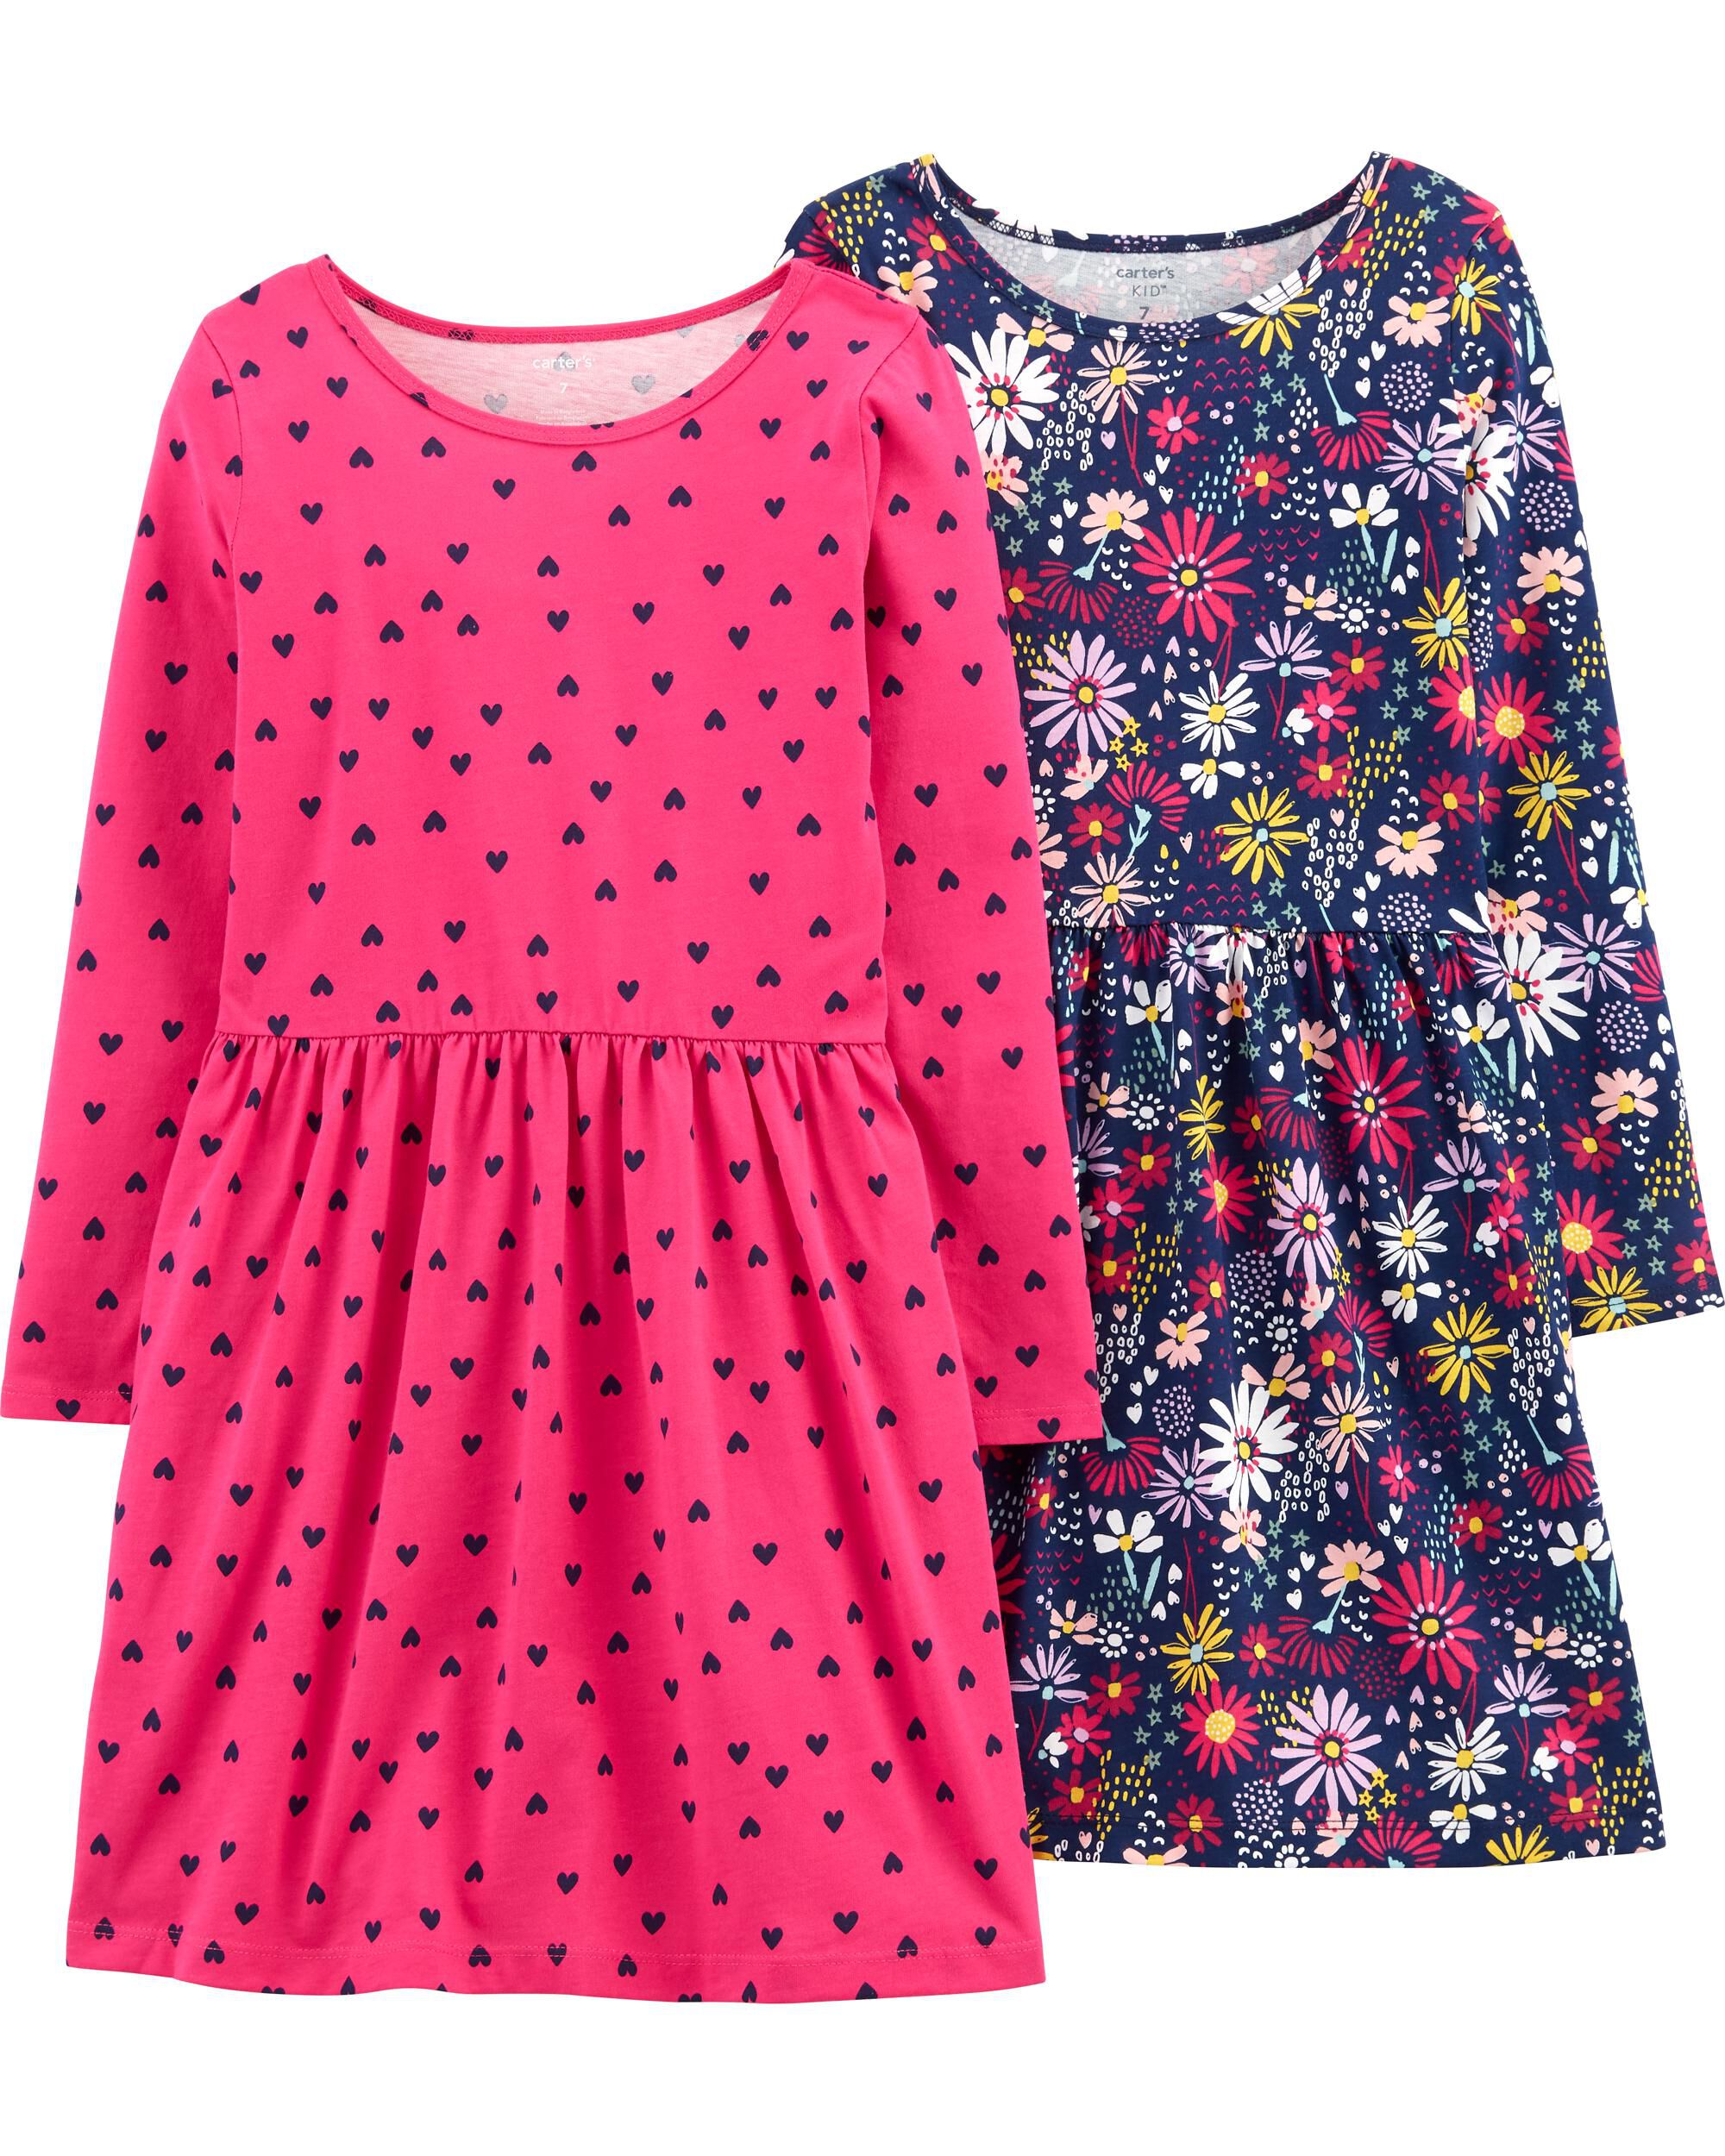 pretty dresses for little kids